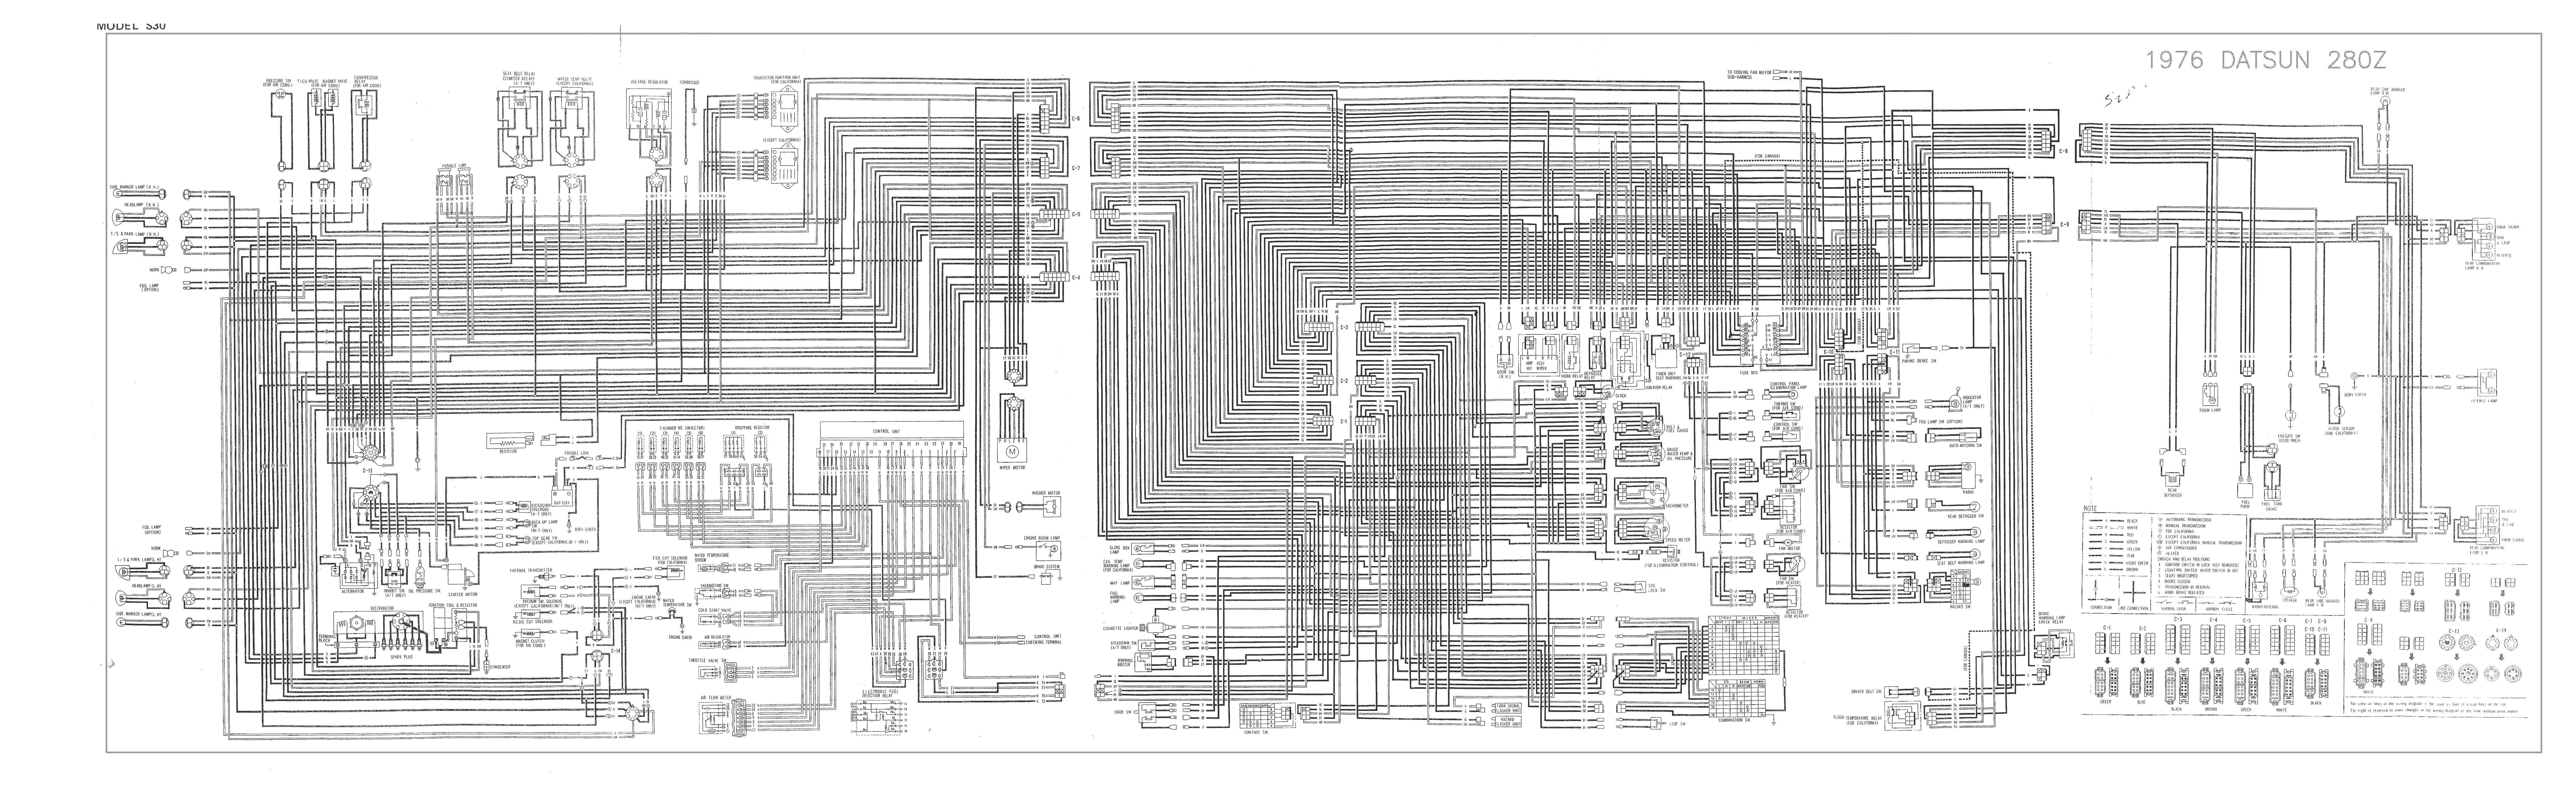 1976 datsun 280z wiring diagram